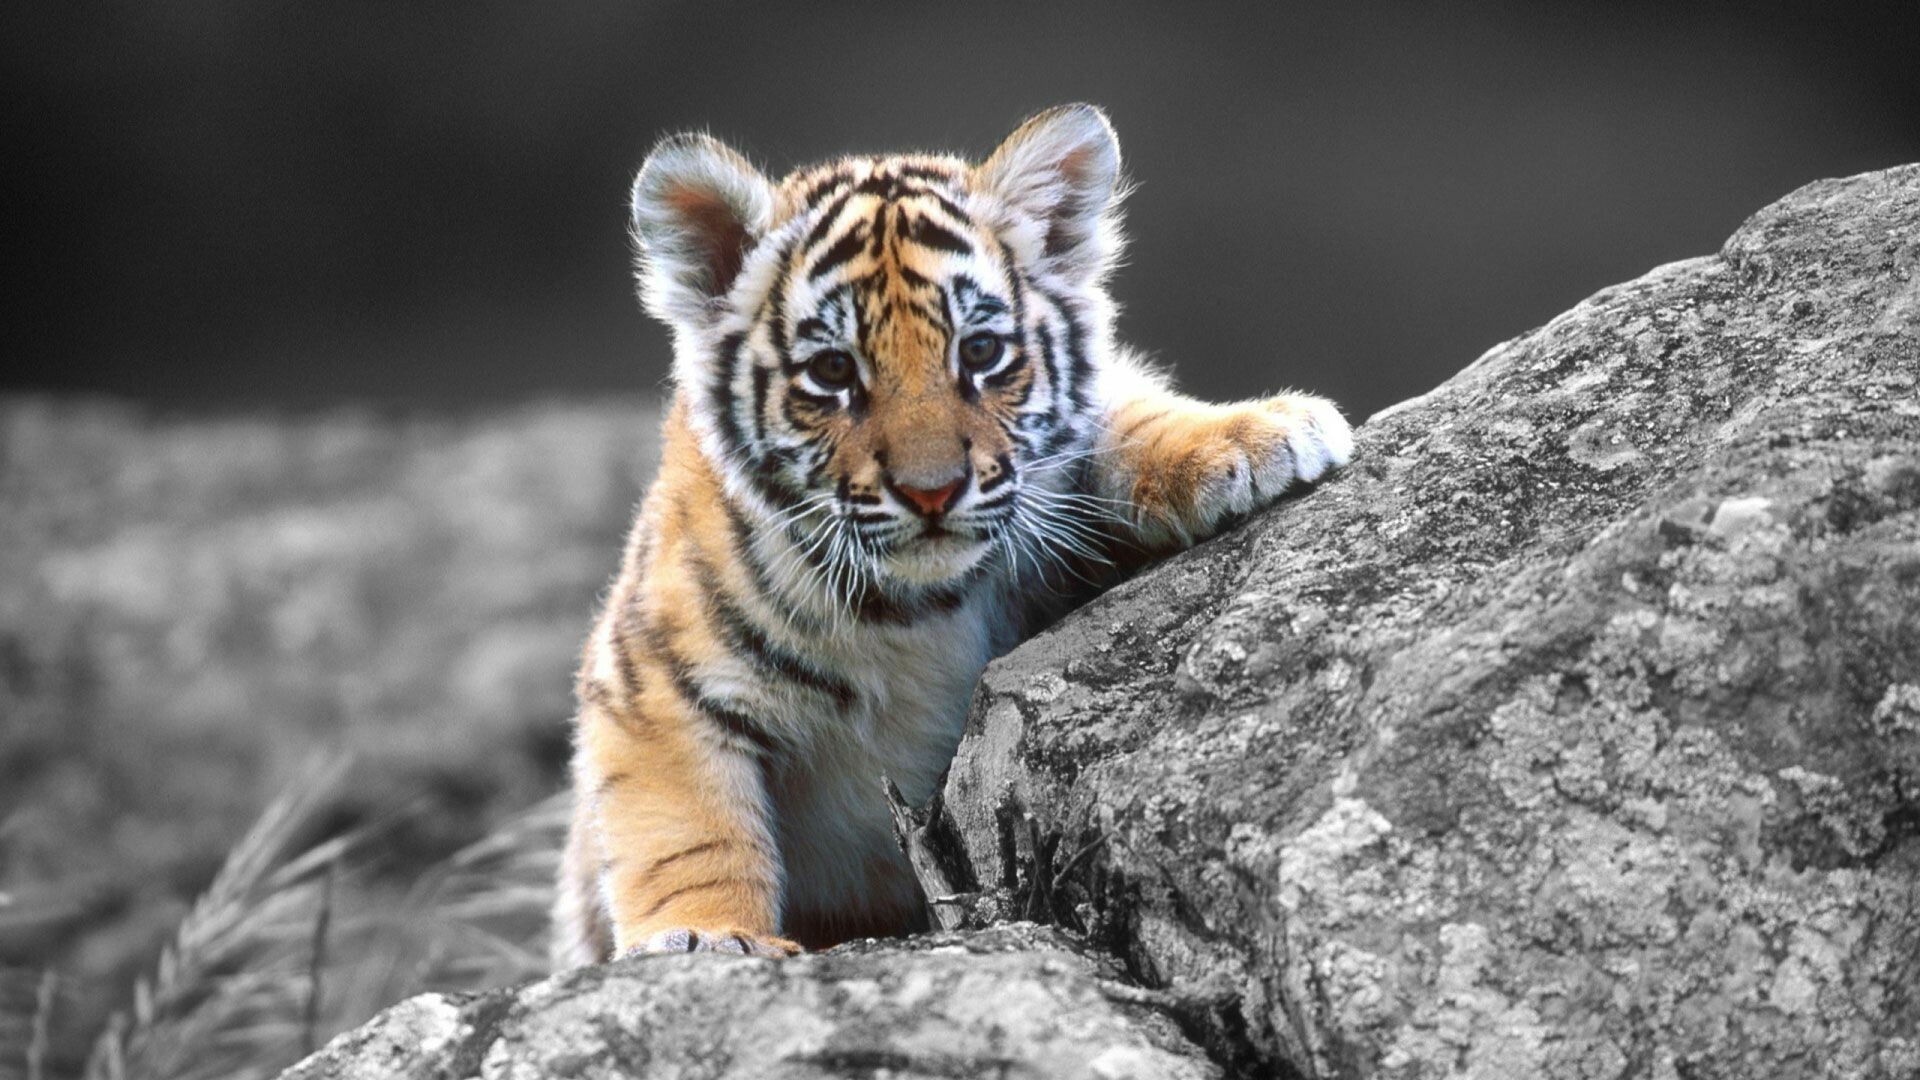 Tiger Cub: Adorable baby animals, Striped predator, Big cats. 1920x1080 Full HD Wallpaper.